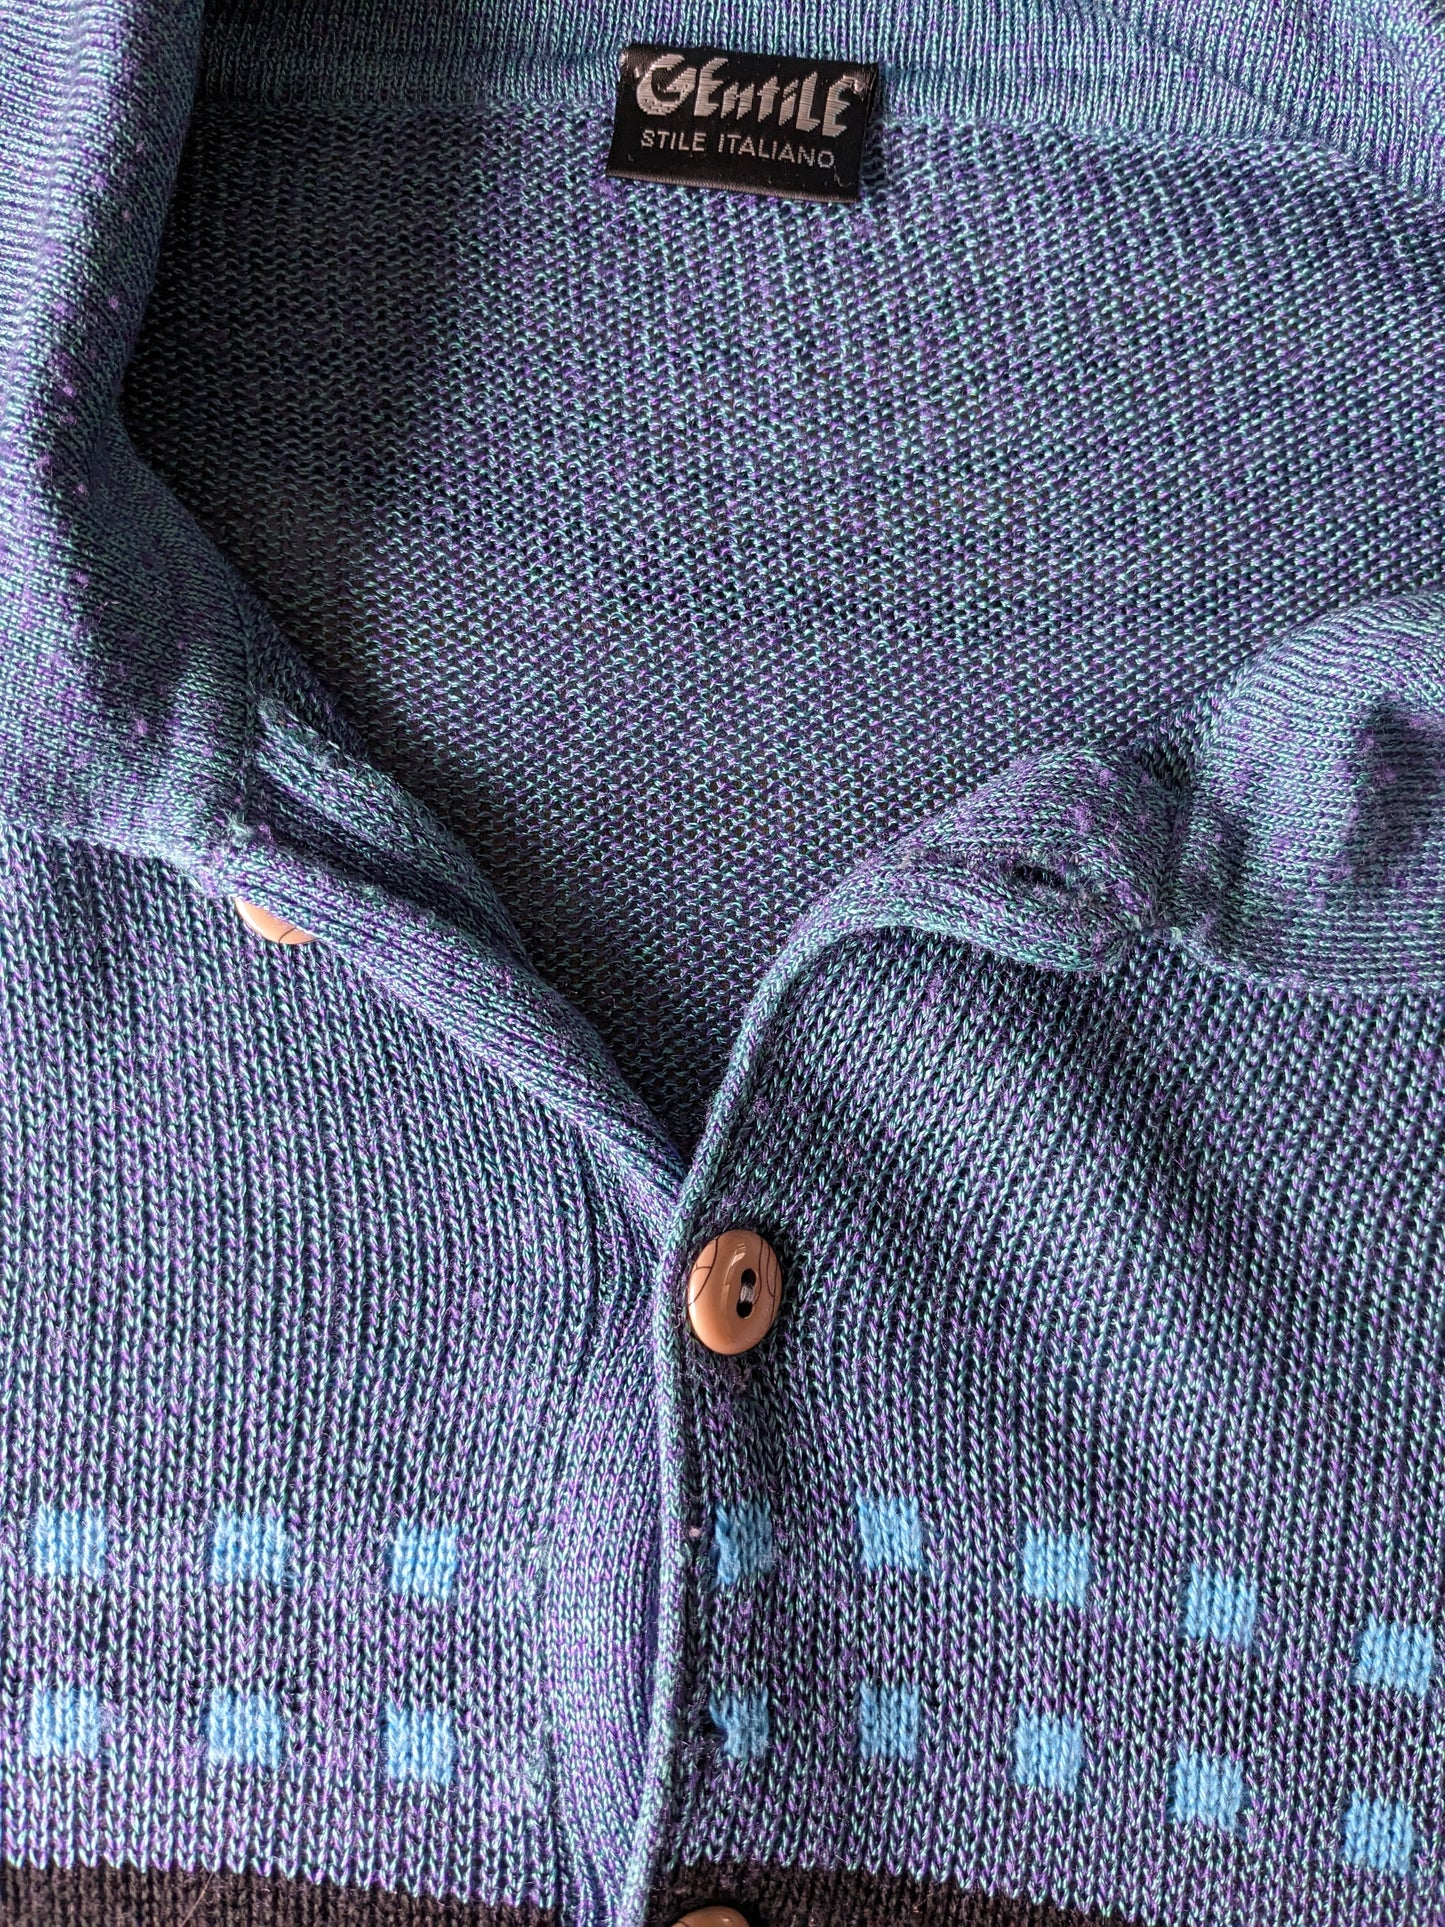 Suéter de polo gentil antiguo. Negro de color púrpura gris azul. Talla L.